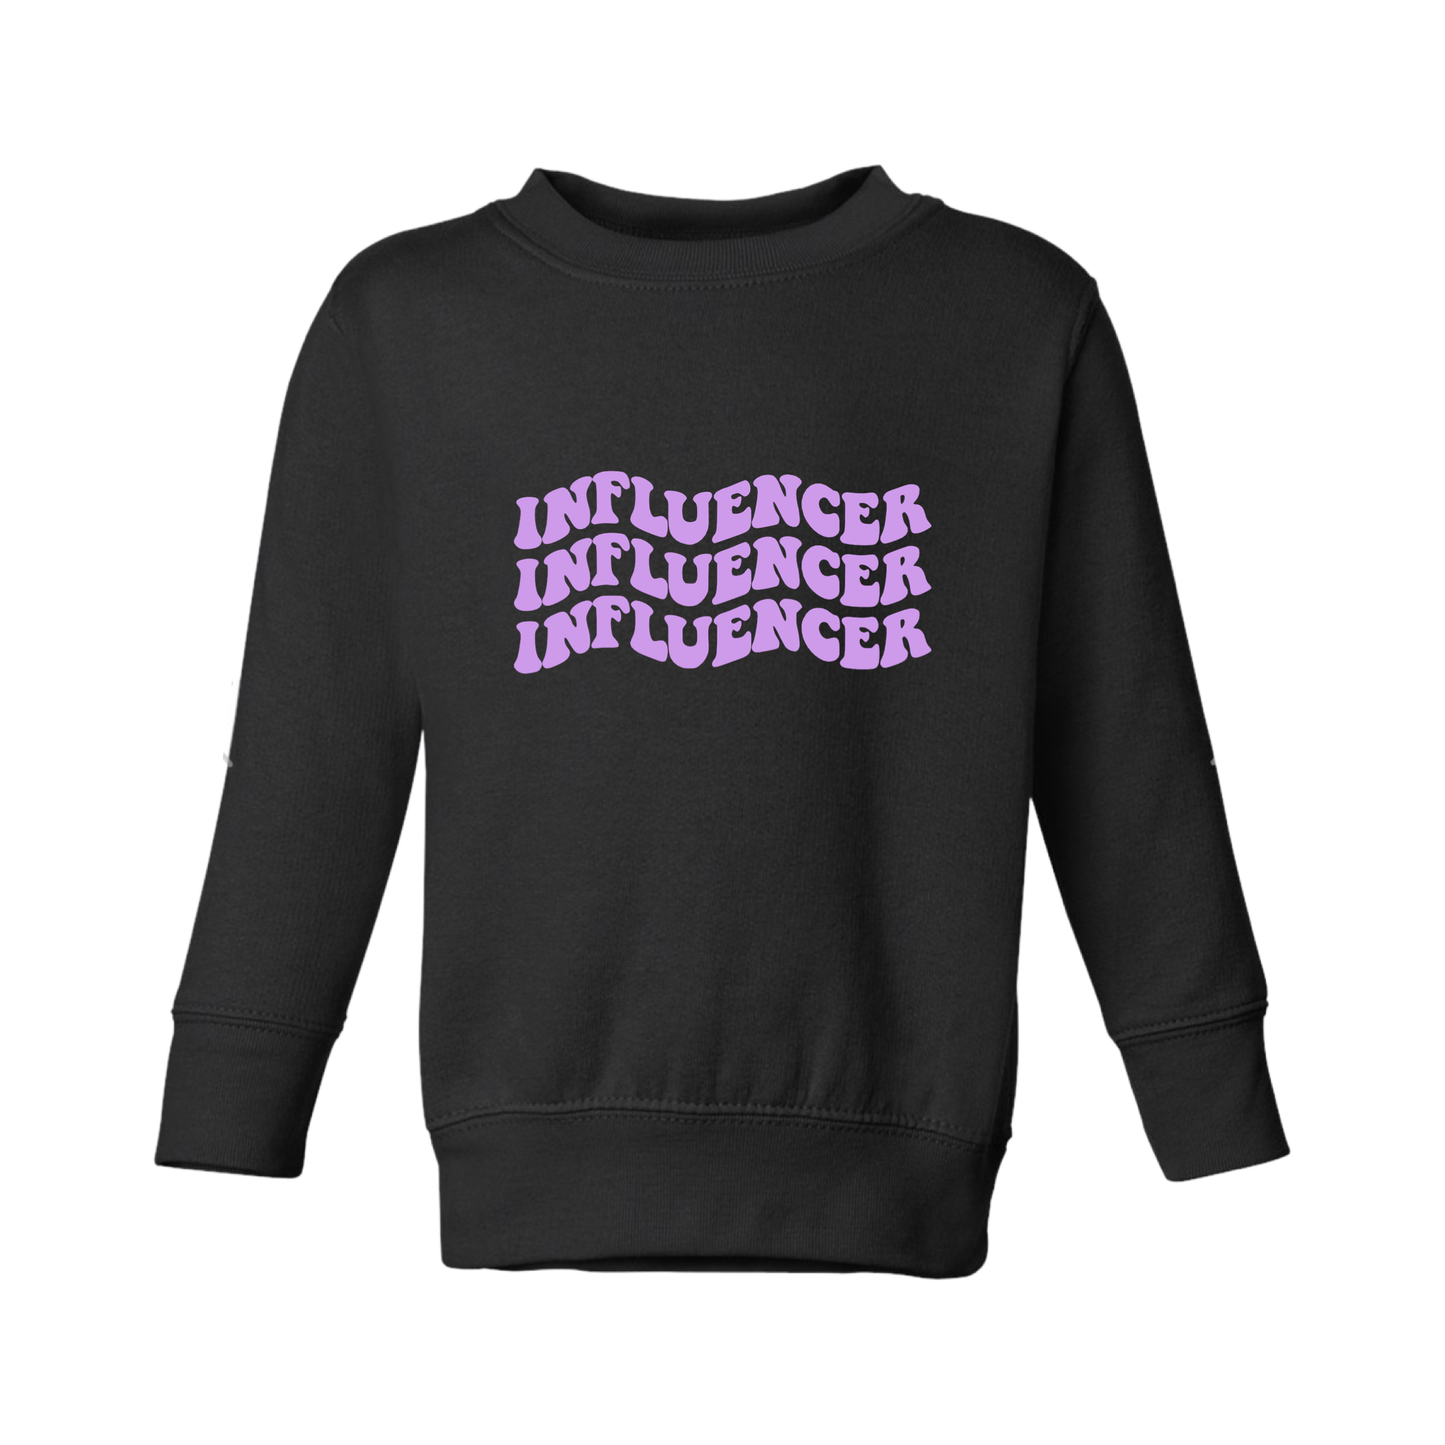 Influencer Children's Sweatshirt